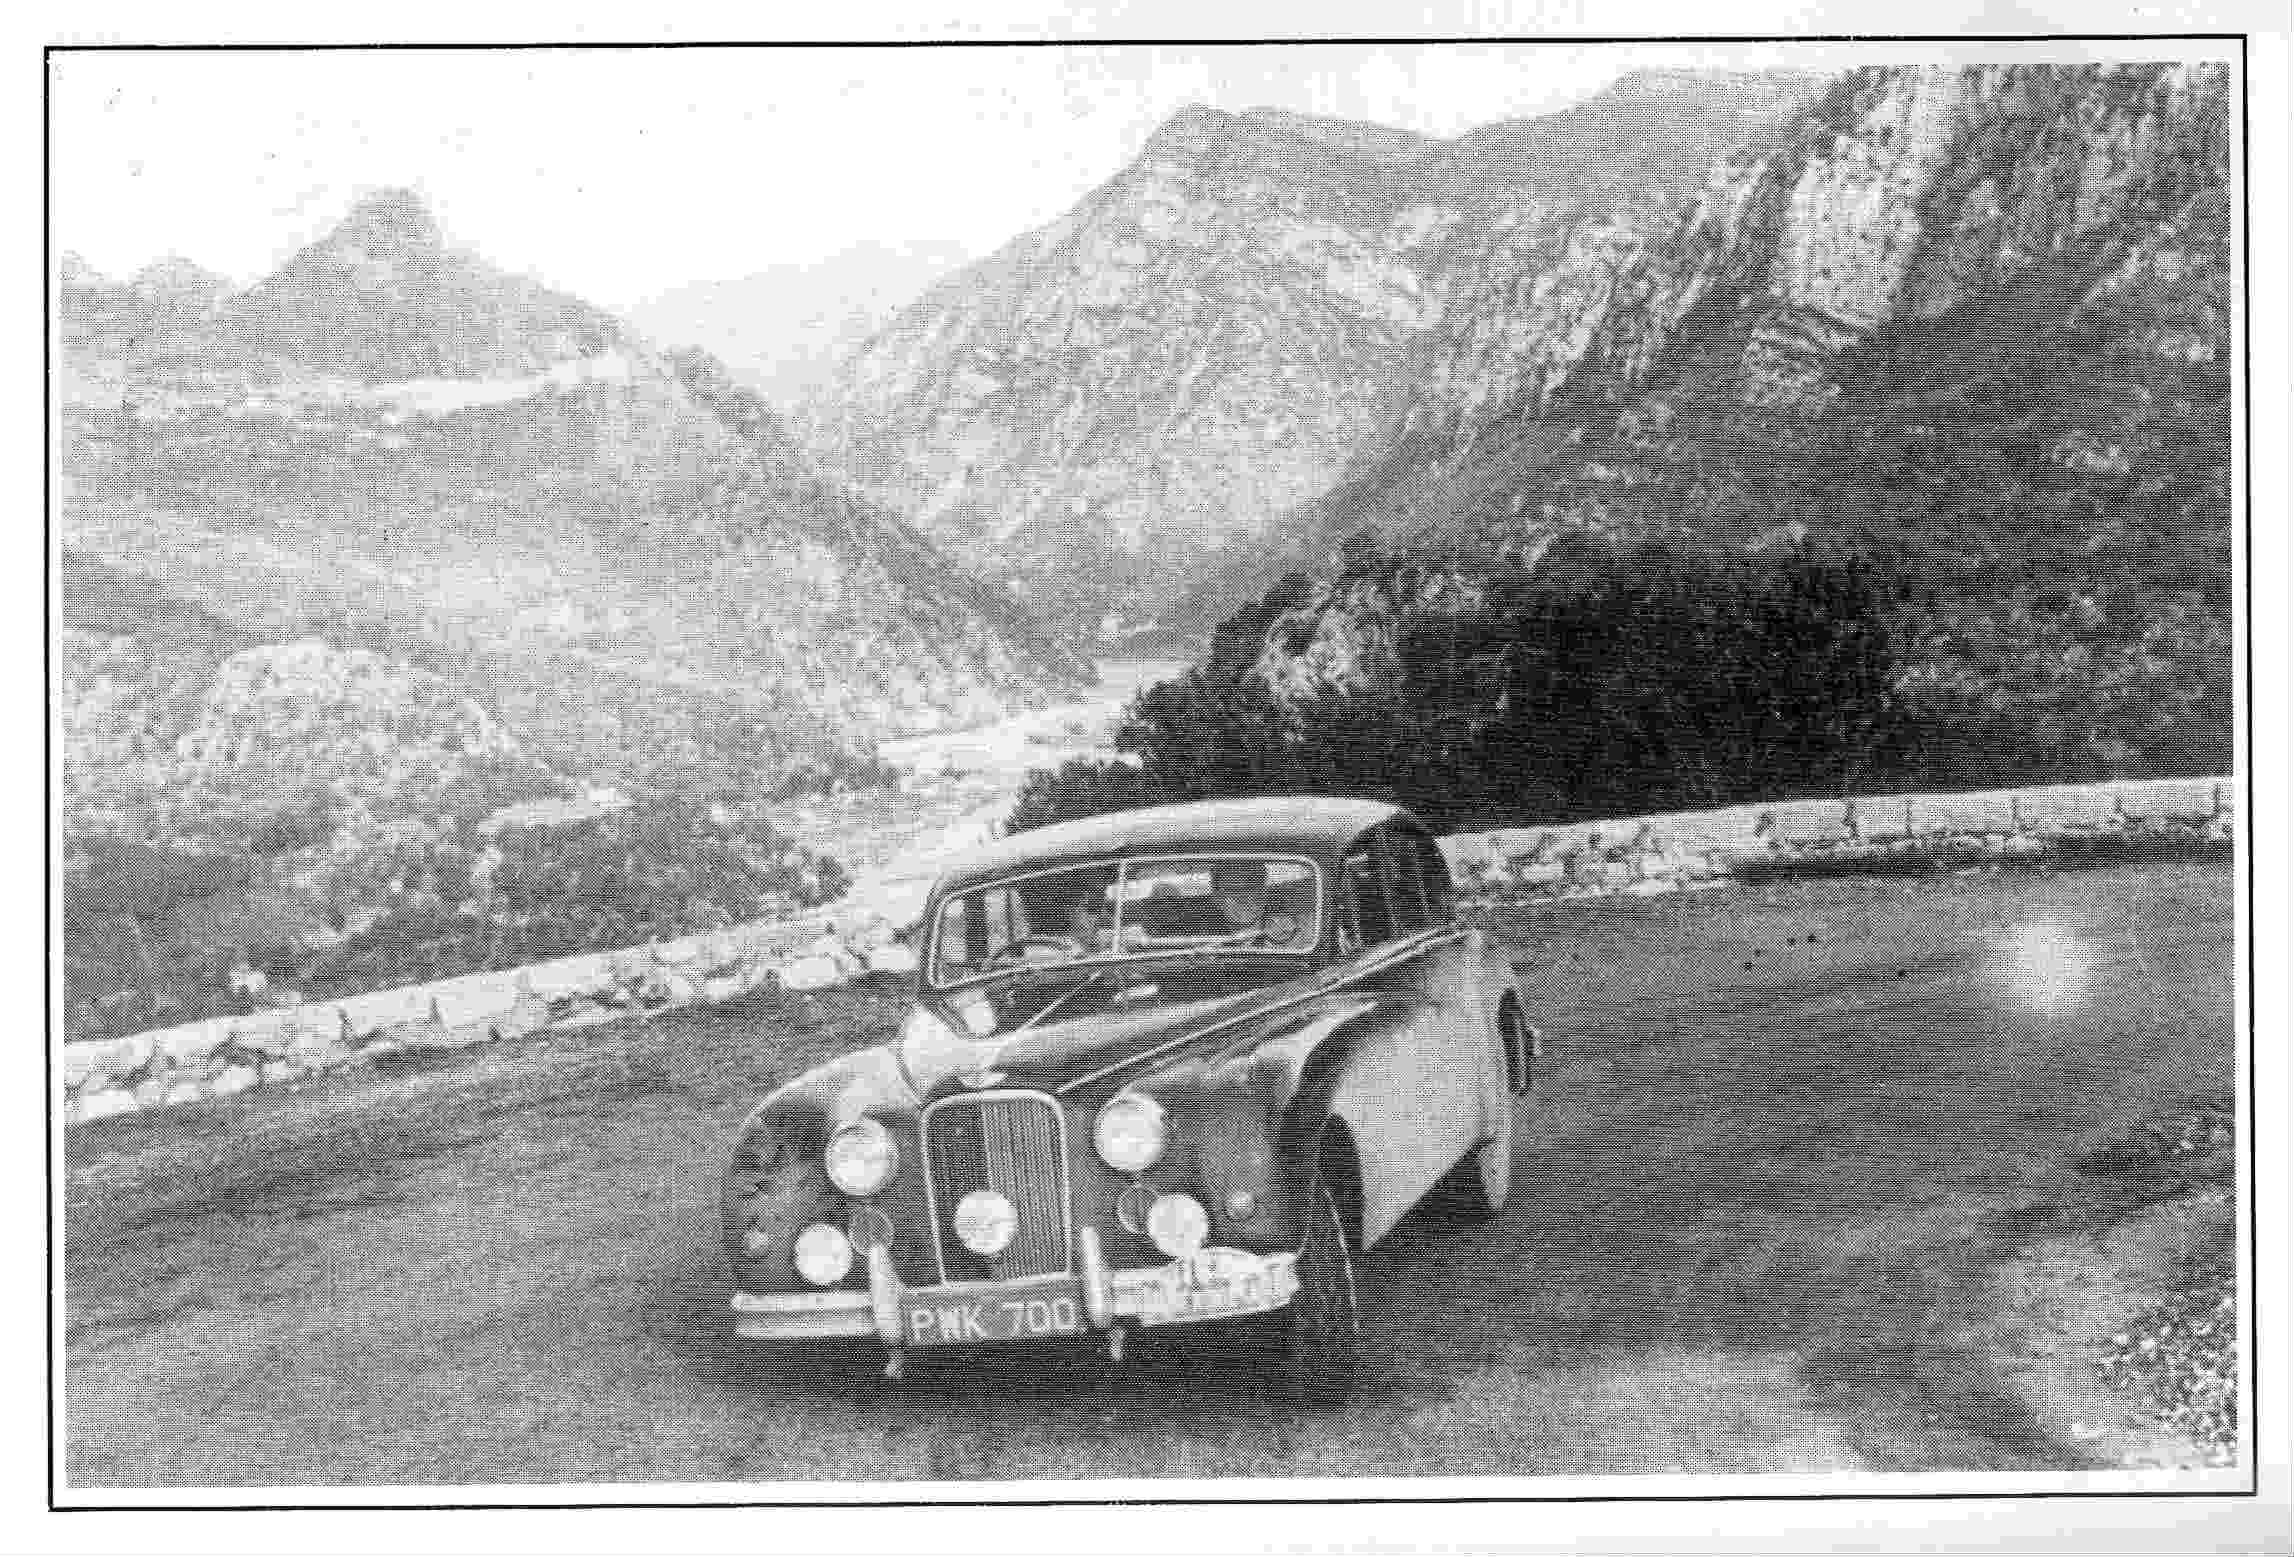 Re-Live The 1958 Alpine Rally